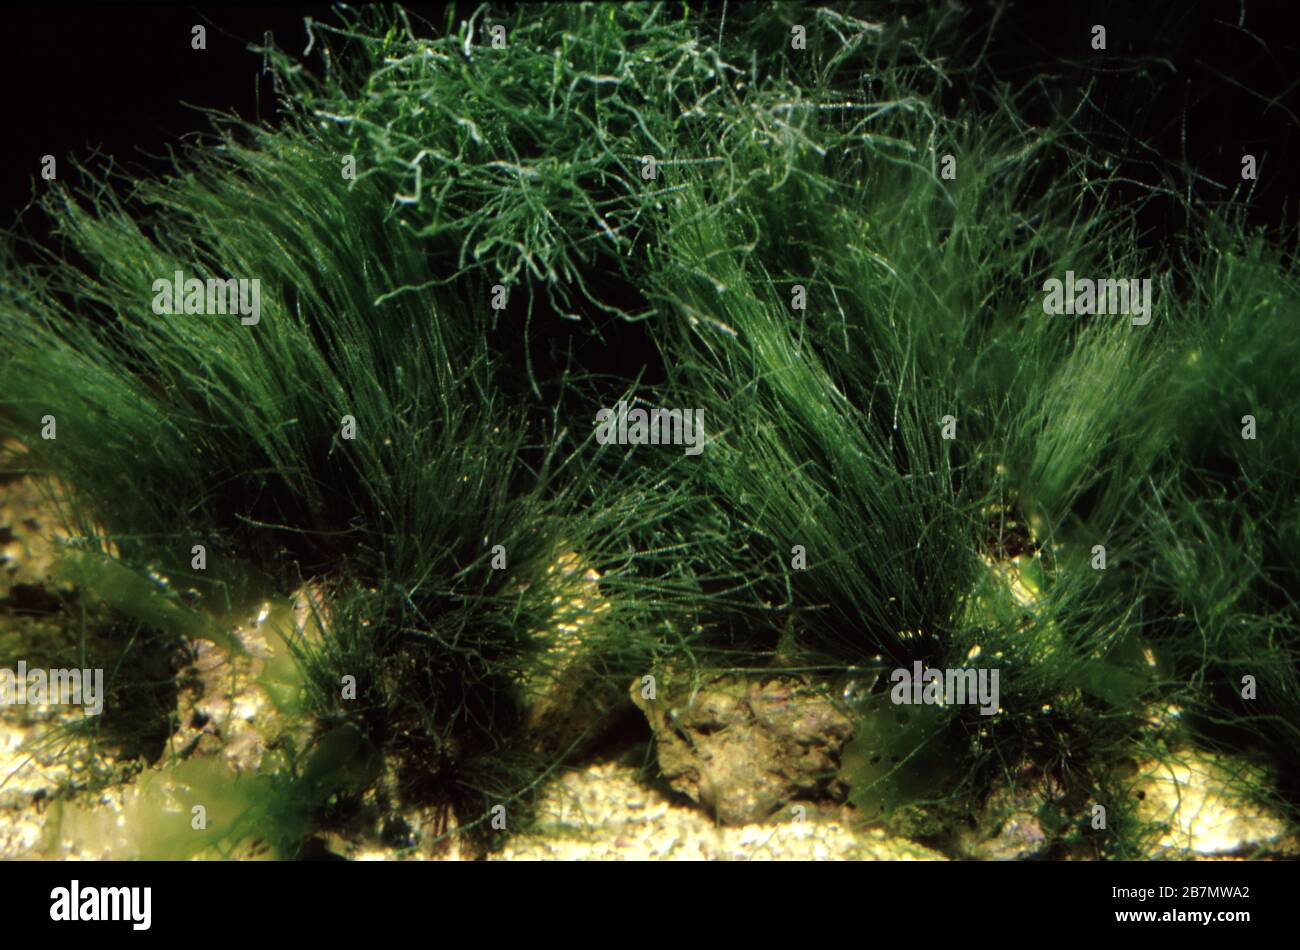 Filamentous green marine alga, Cladophora prolifera Stock Photo